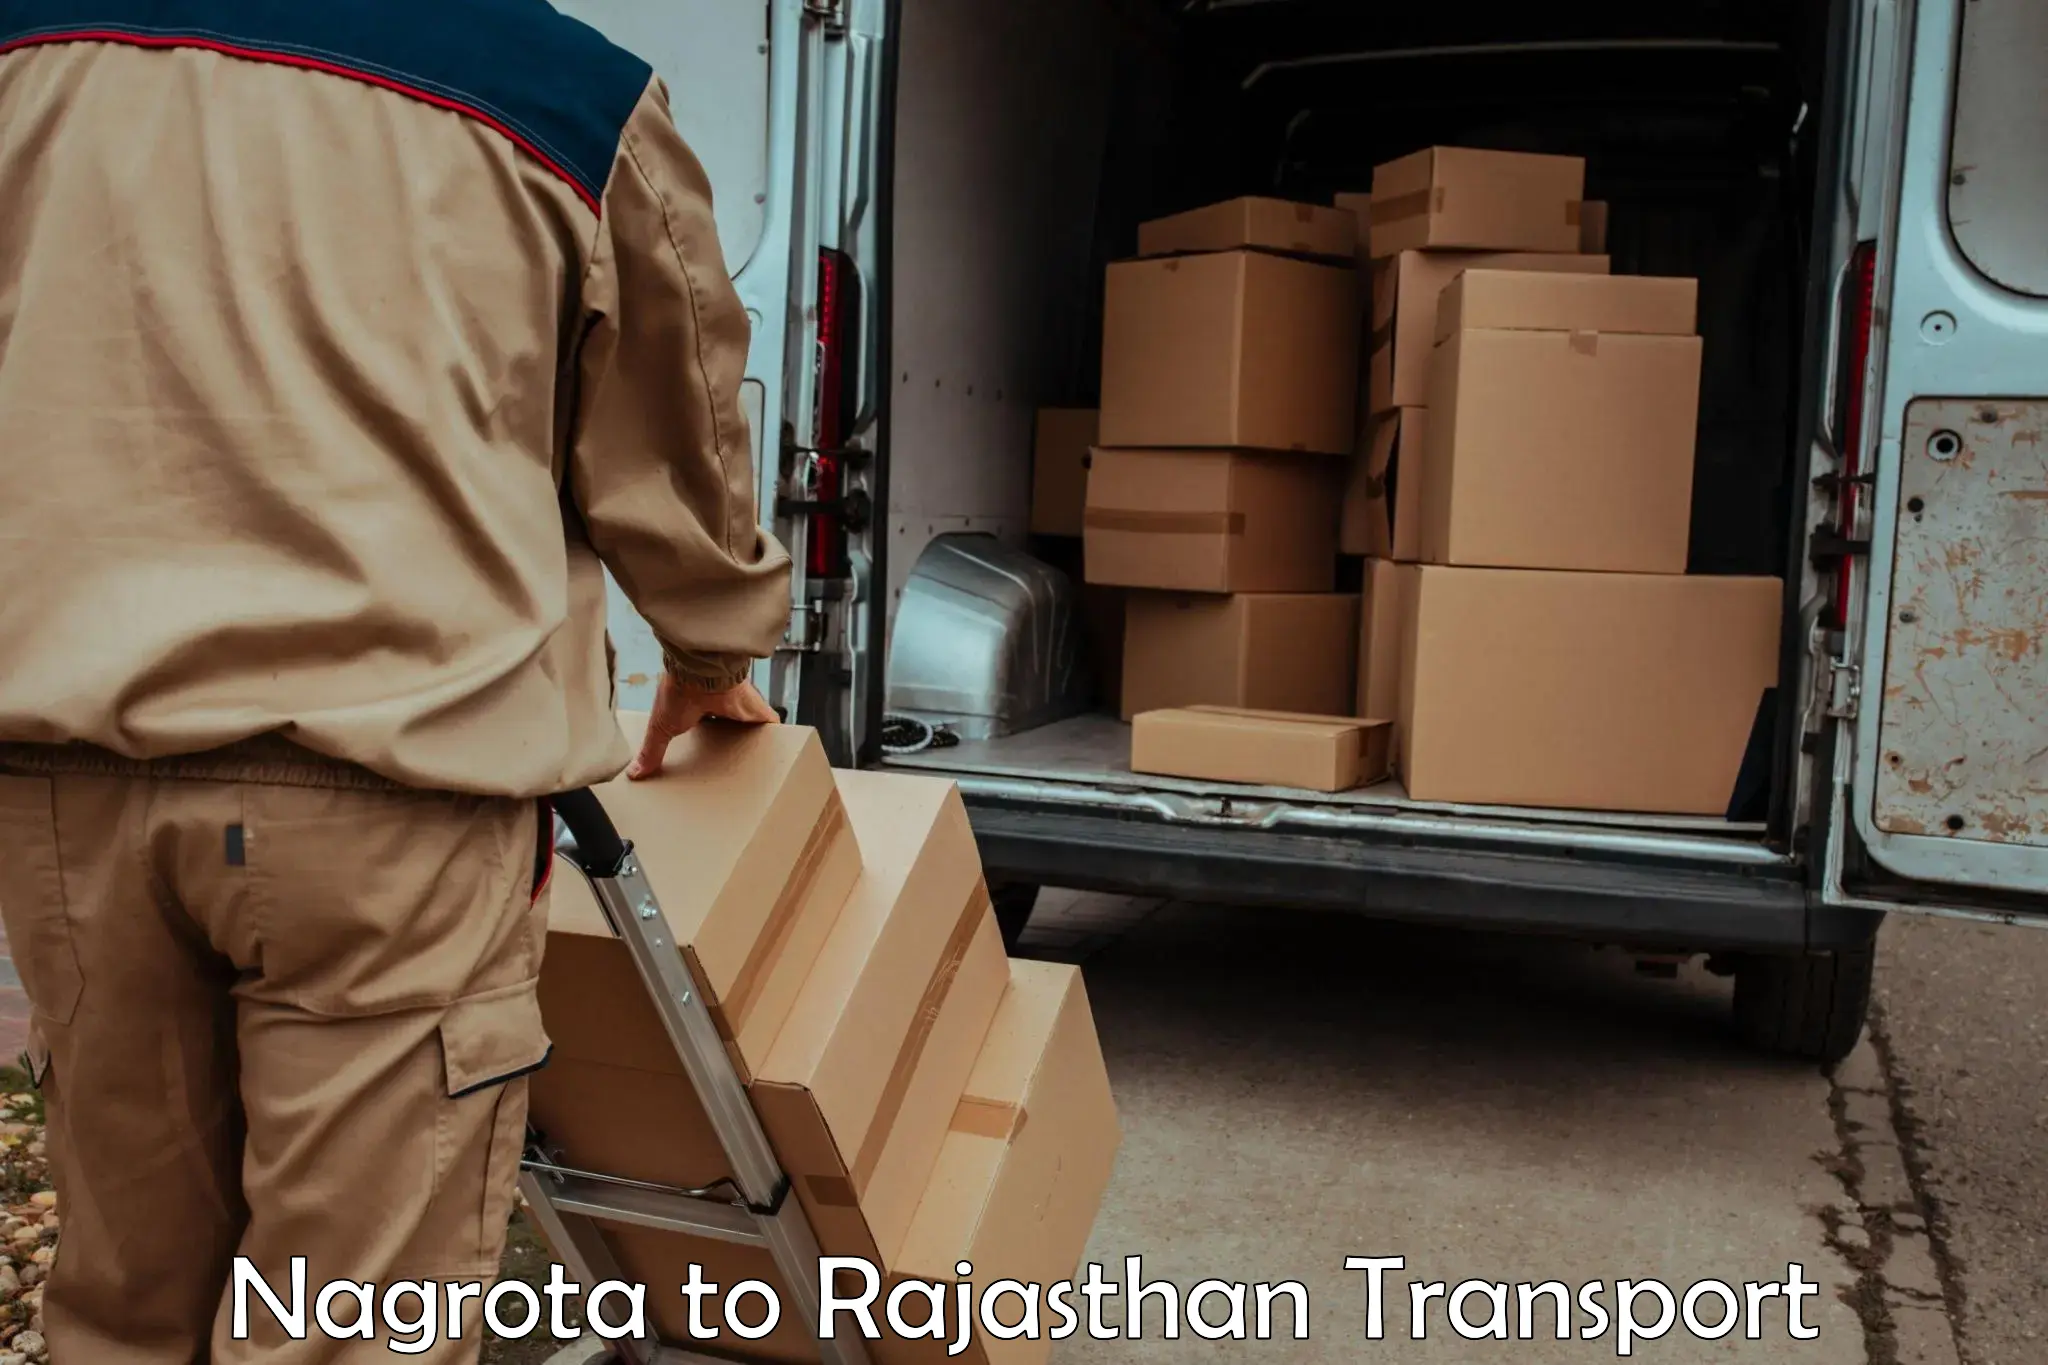 Truck transport companies in India in Nagrota to Jaipur